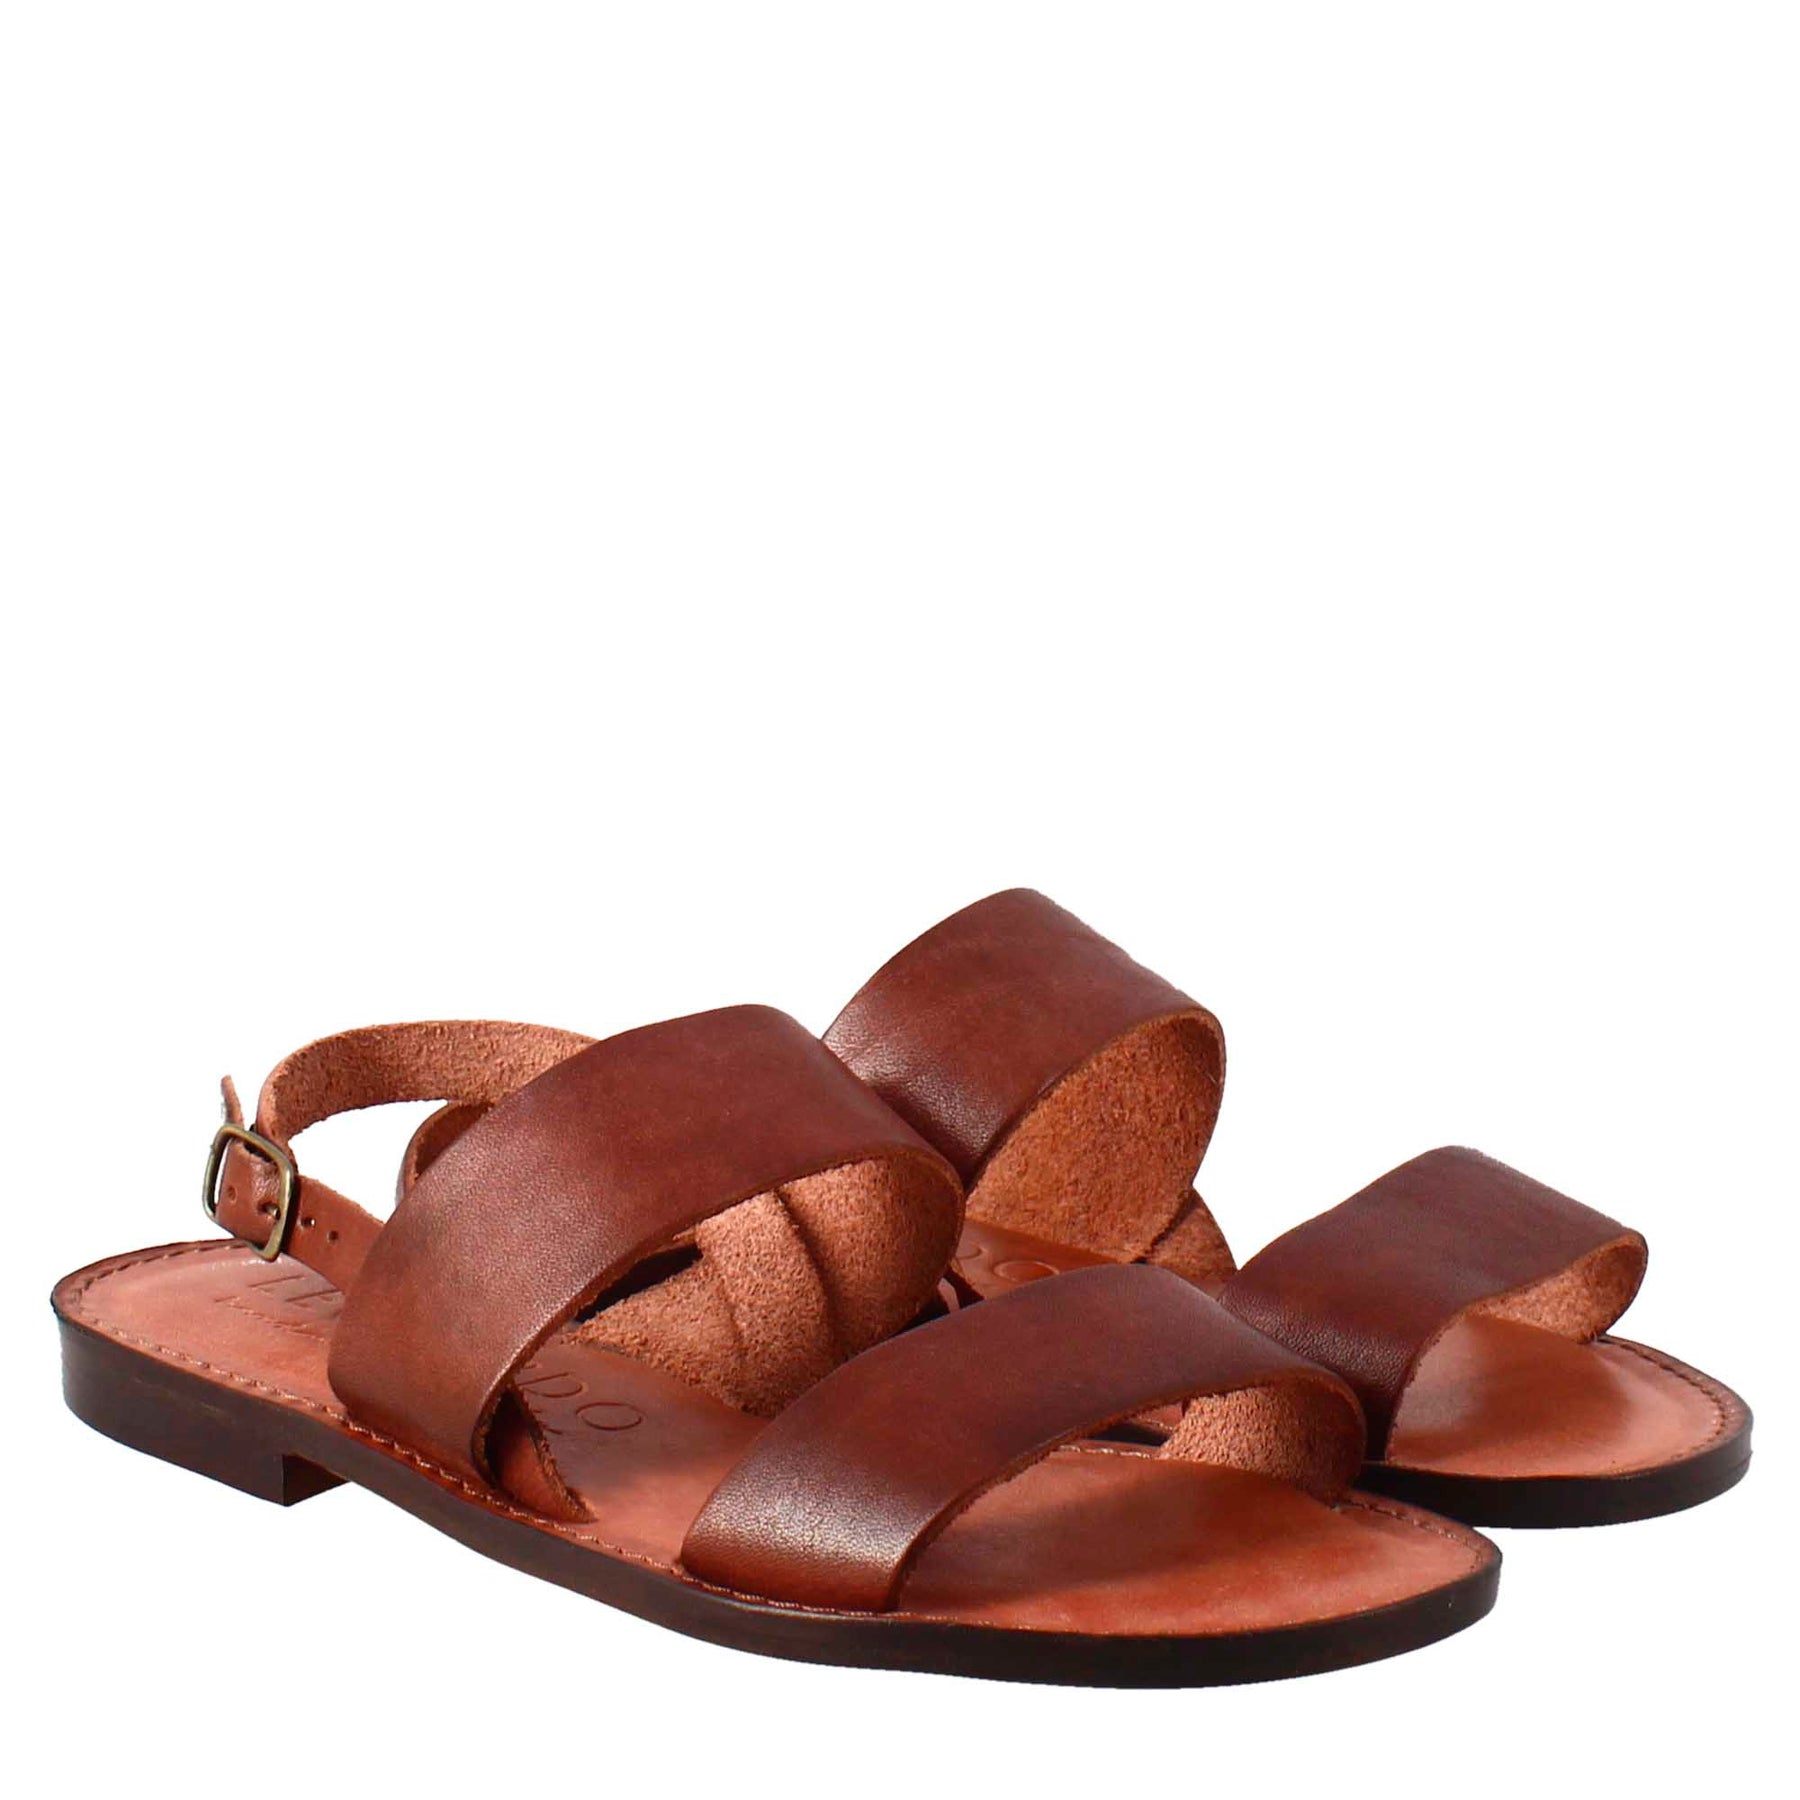 Women's Euphoria ancient Roman style brown leather sandals